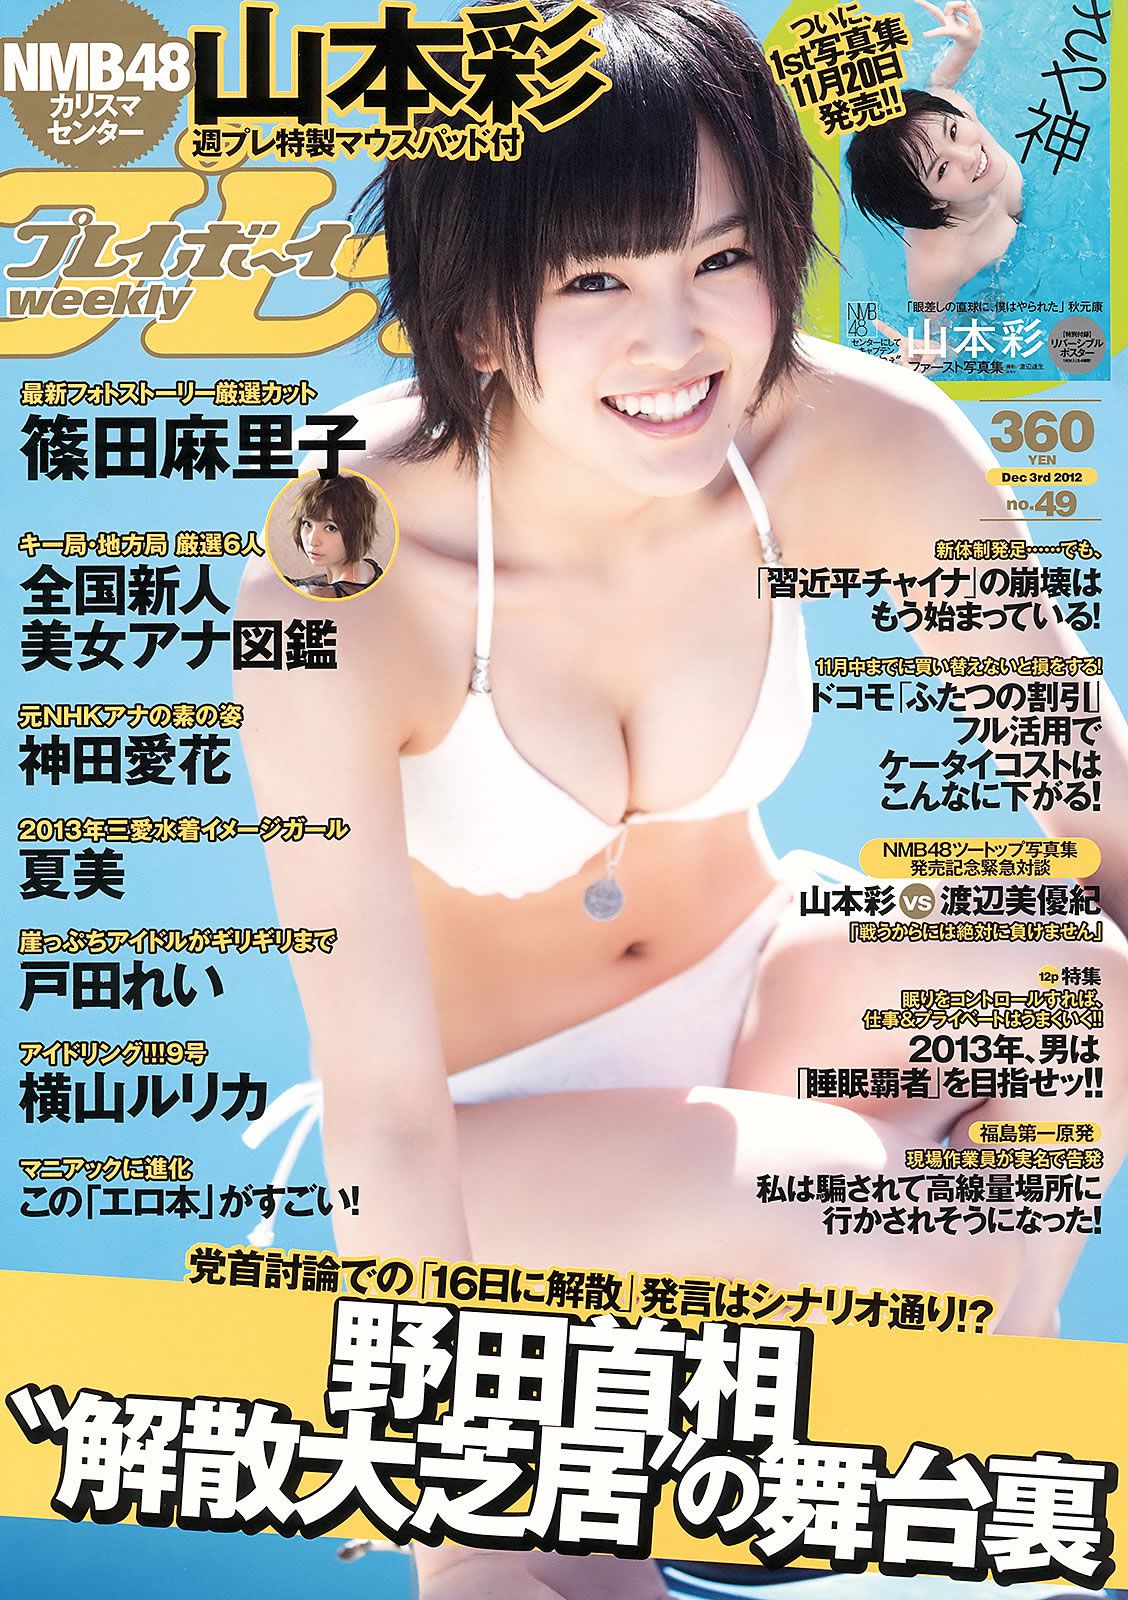 [Weekly Playboy] 2012 No.49 山本彩 夏美 戸田れい 神田愛花 篠田麻里子 横山ルリカ [39P]